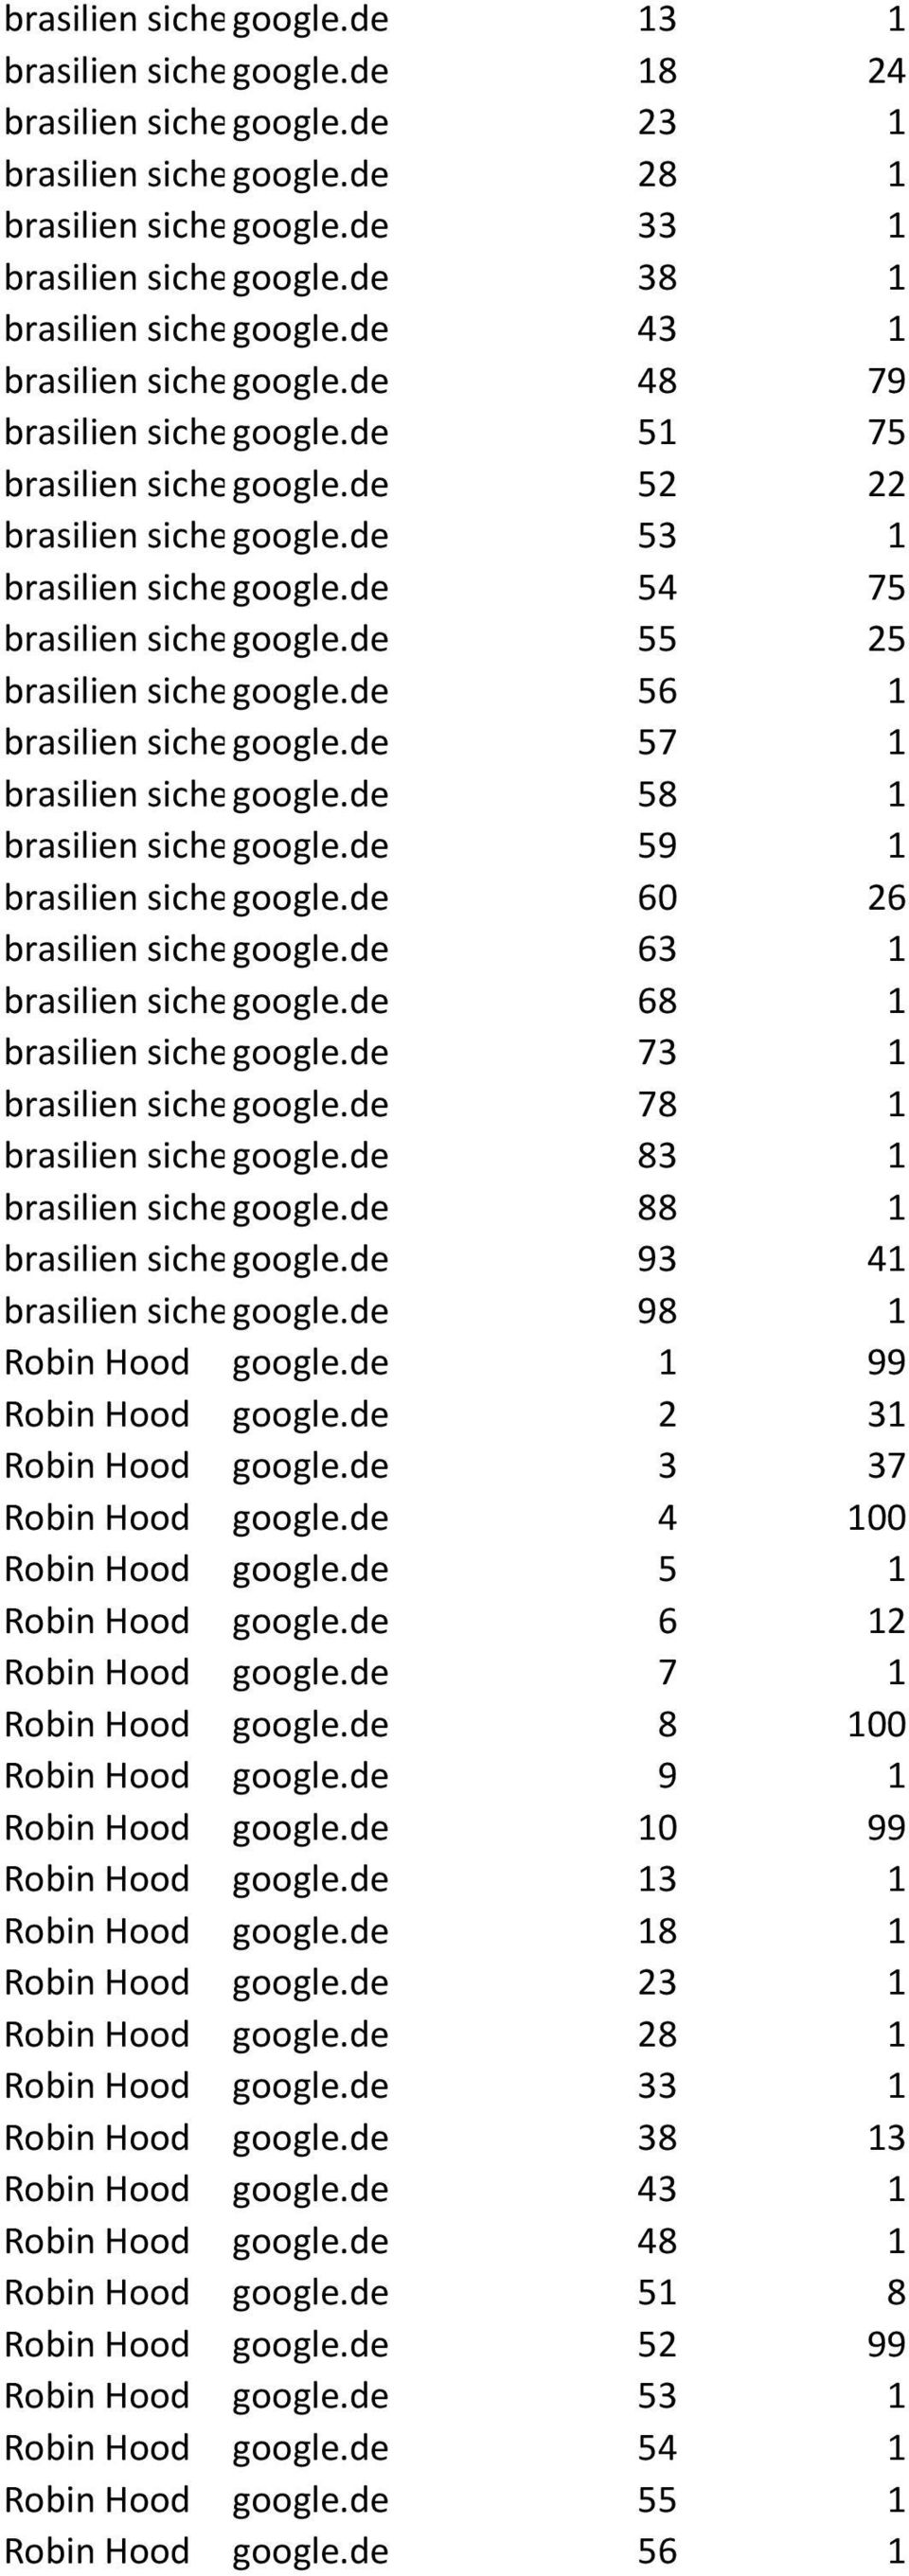 de 52 22 brasilien sicherheit google.de 53 1 brasilien sicherheit google.de 54 75 brasilien sicherheit google.de 55 25 brasilien sicherheit google.de 56 1 brasilien sicherheit google.